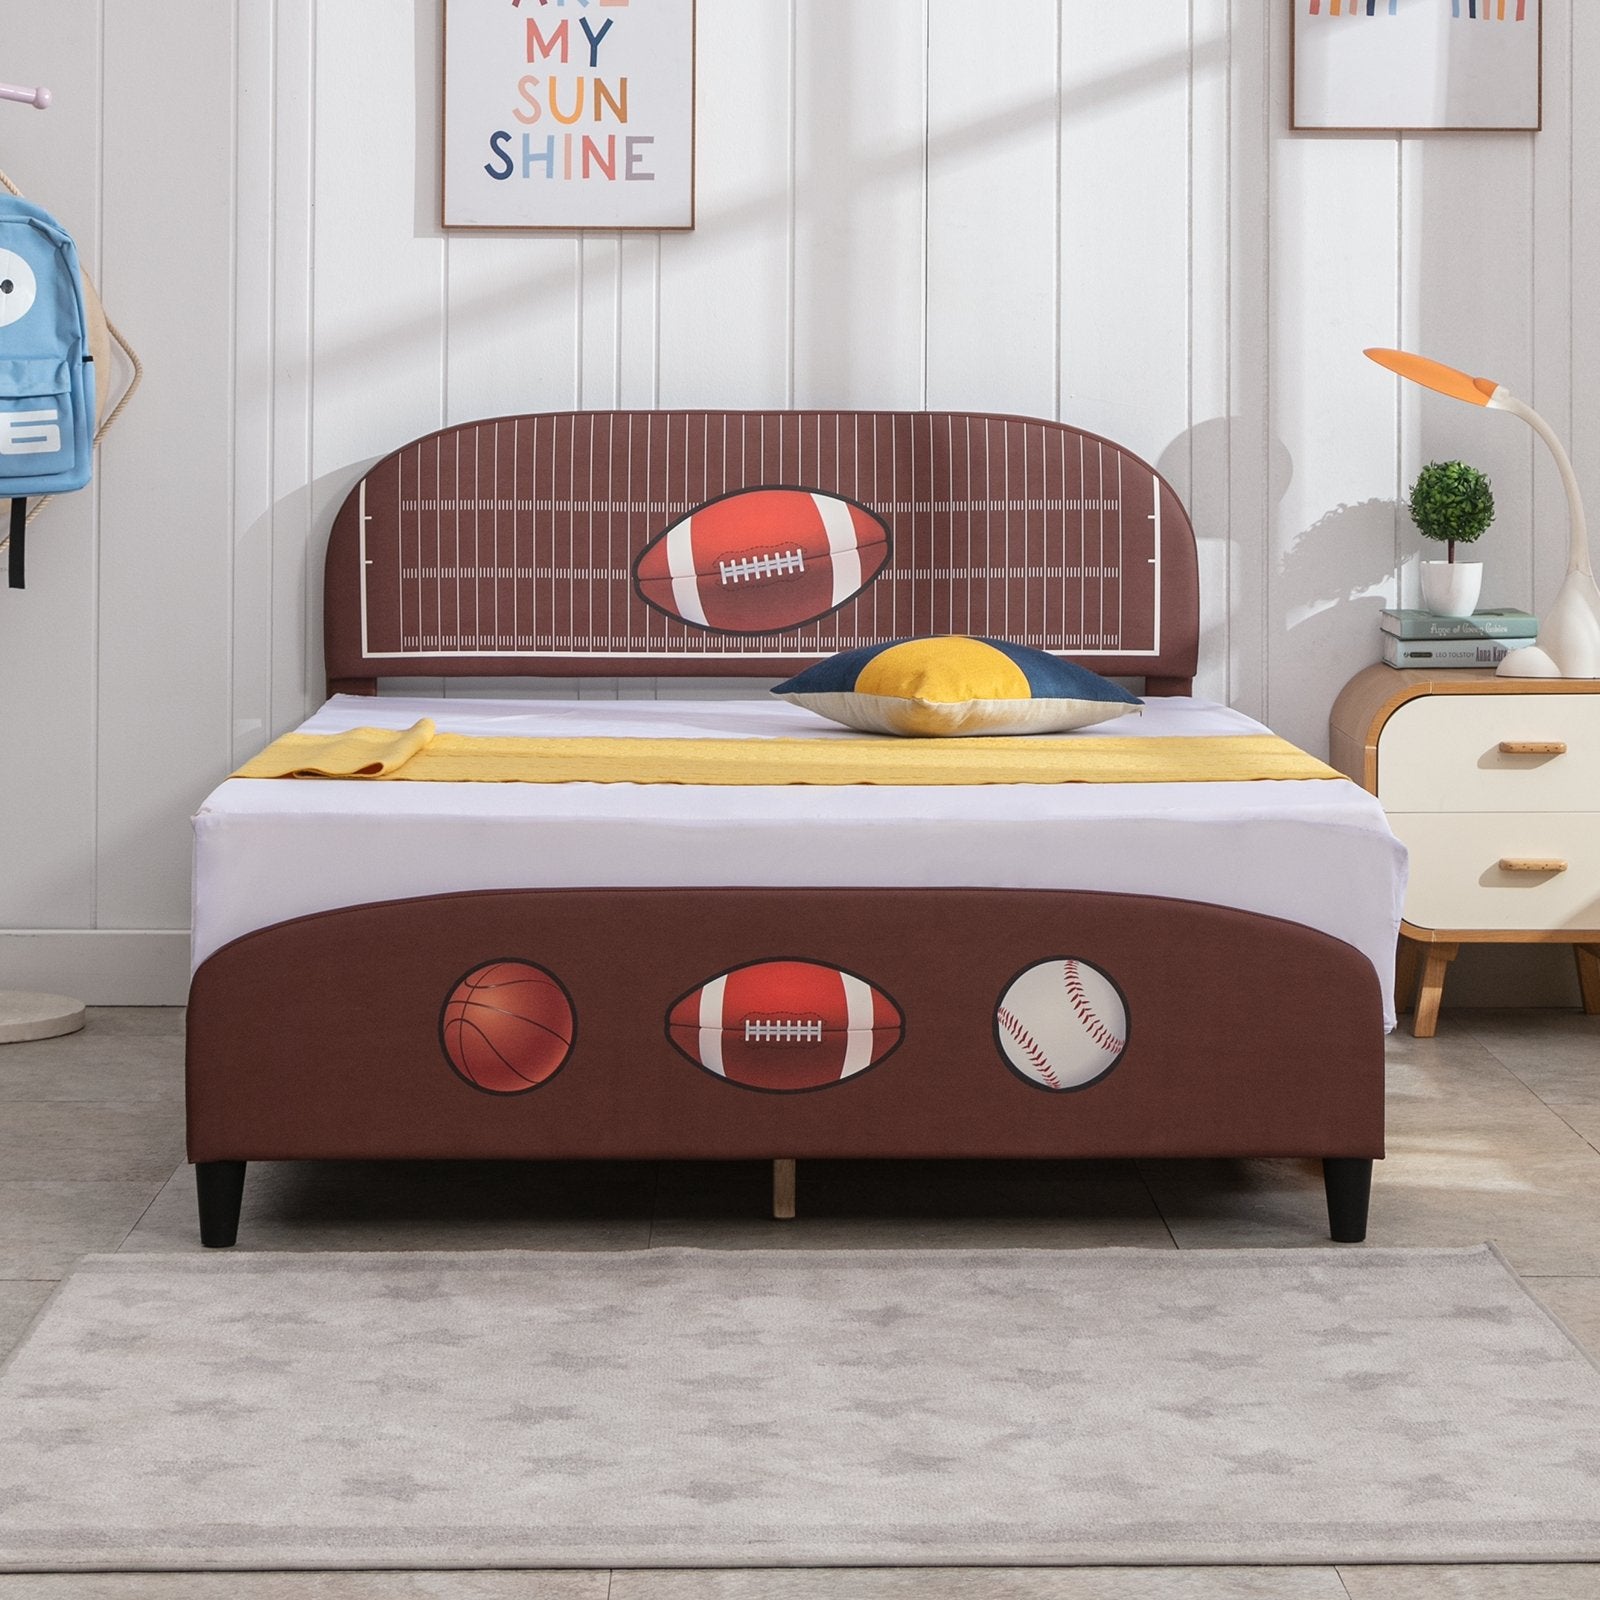 Kid's Bed | Upholstered Toddler Bed with Curved Football Design Headboard - Mjkonebed frame